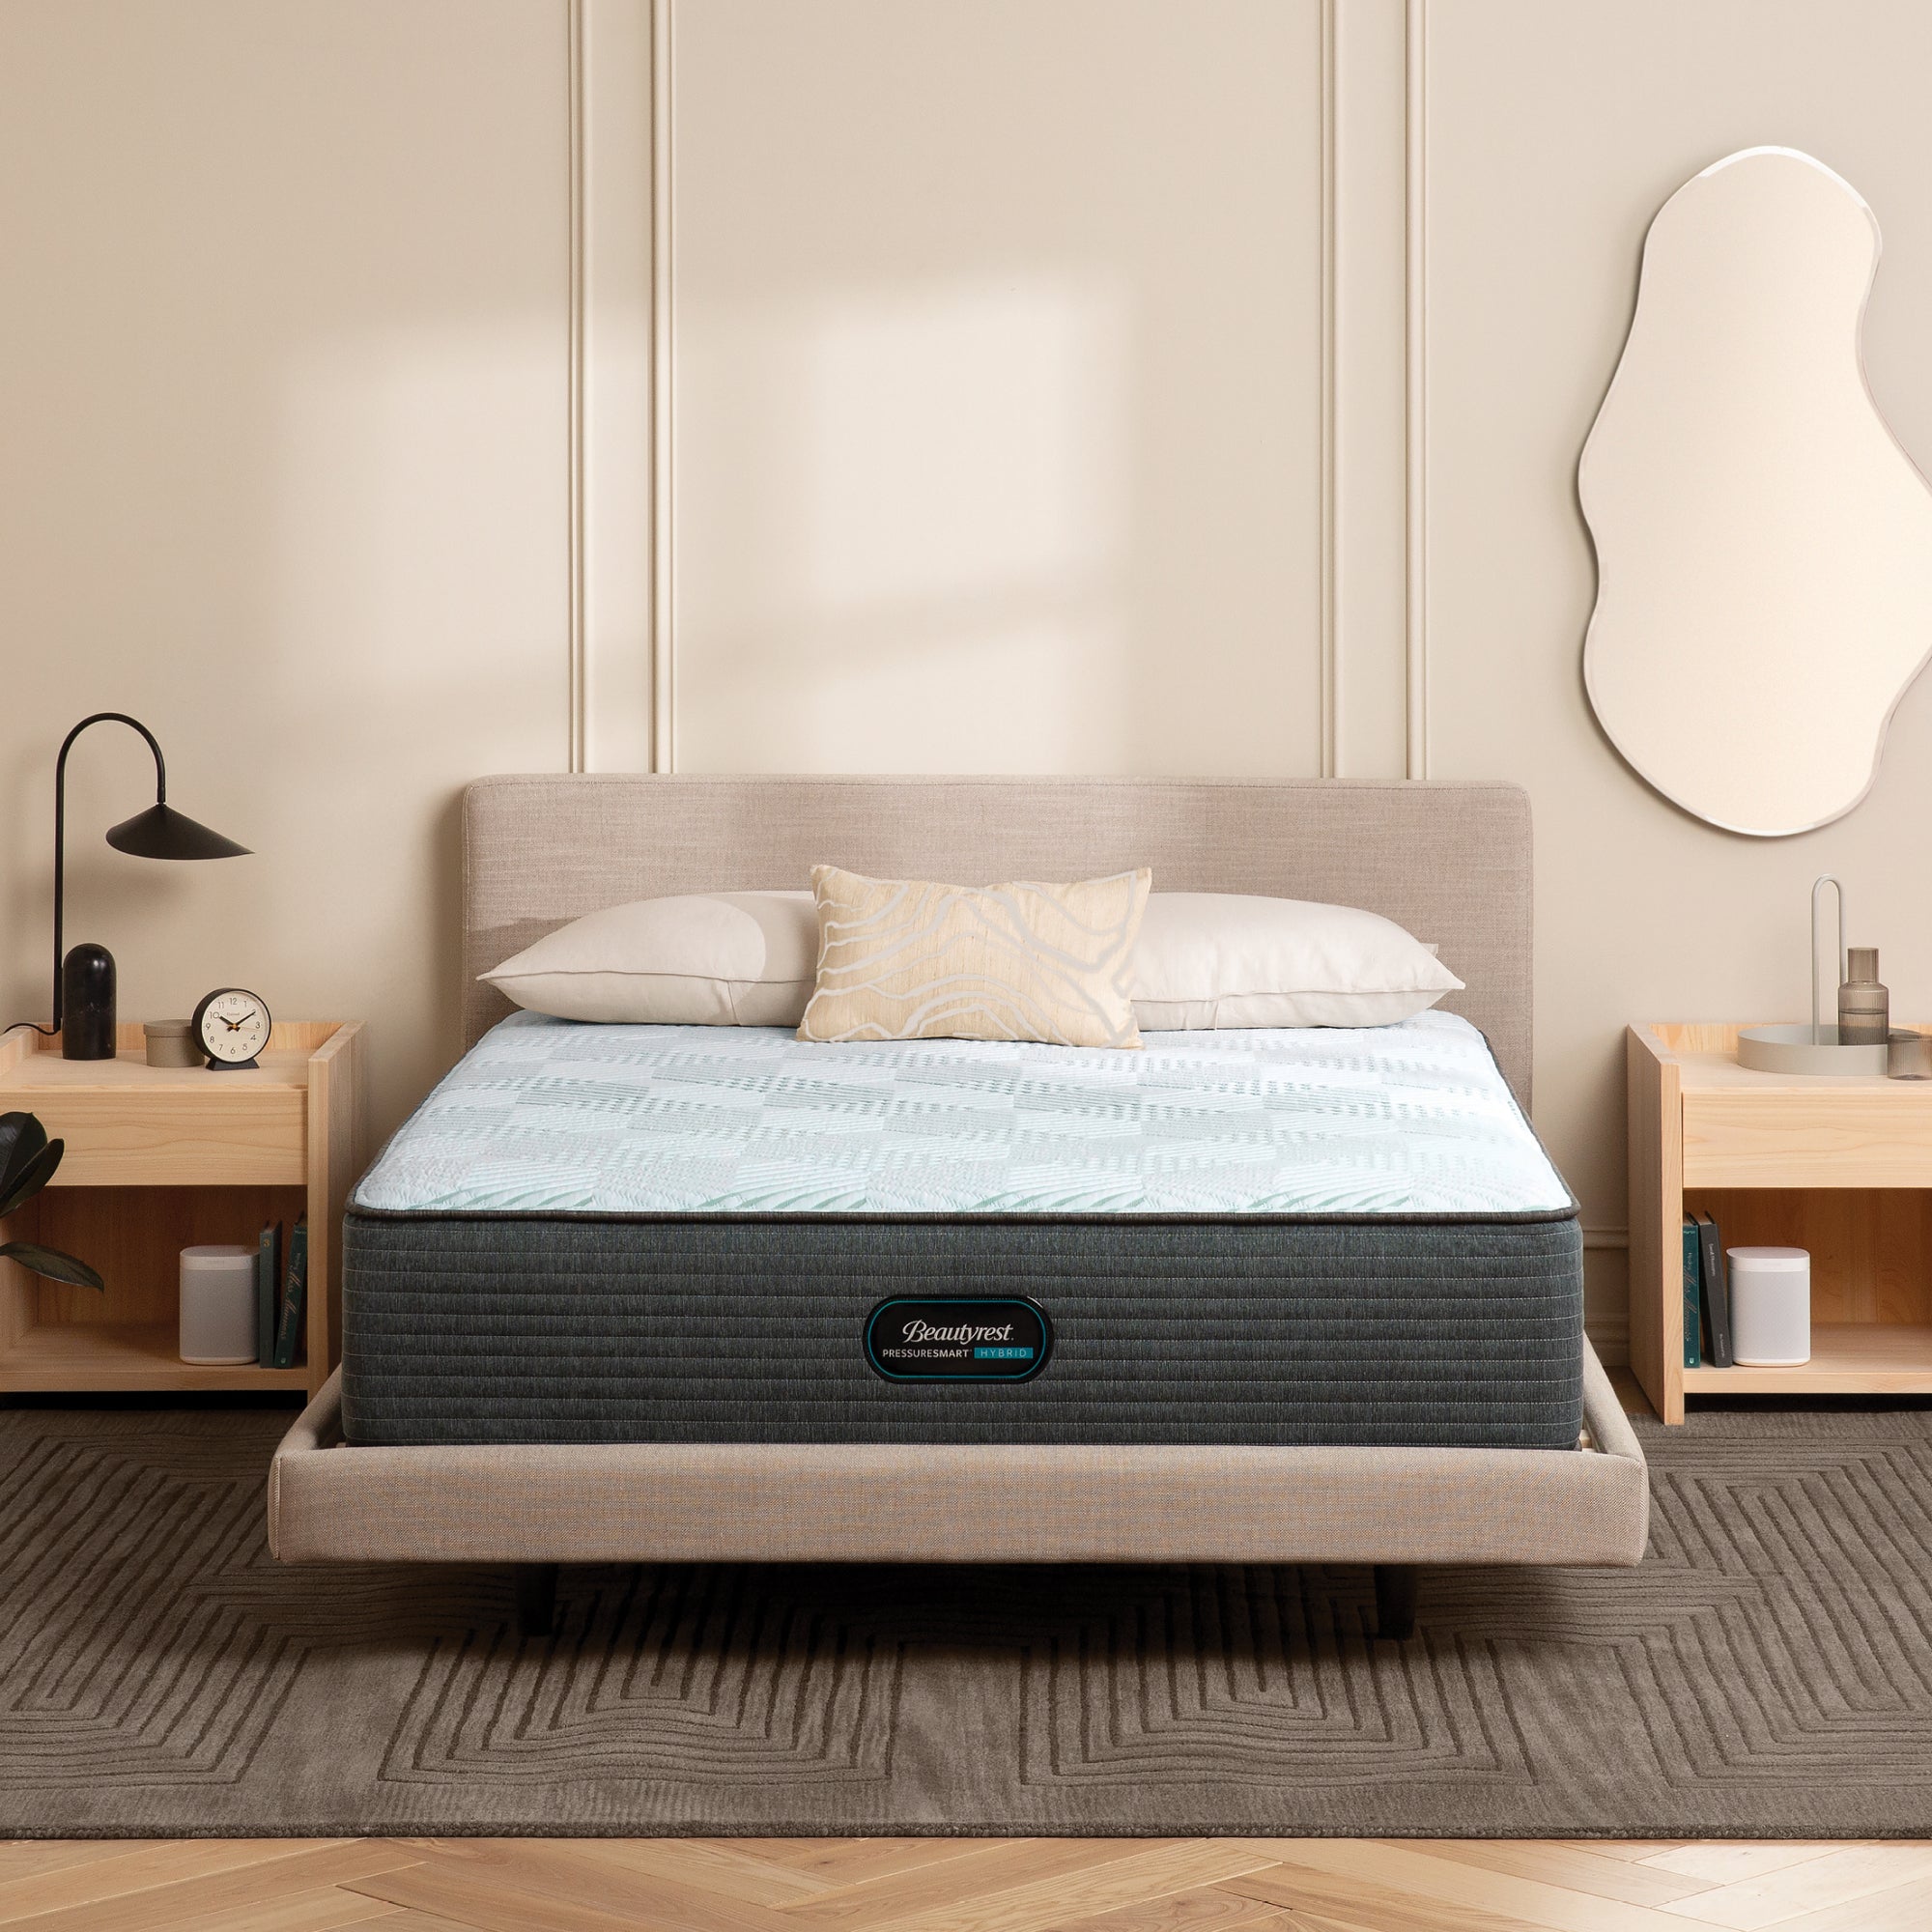 The Beautyrest PressureSmart mattress in a bedroom||feel: firm||series: hybrid